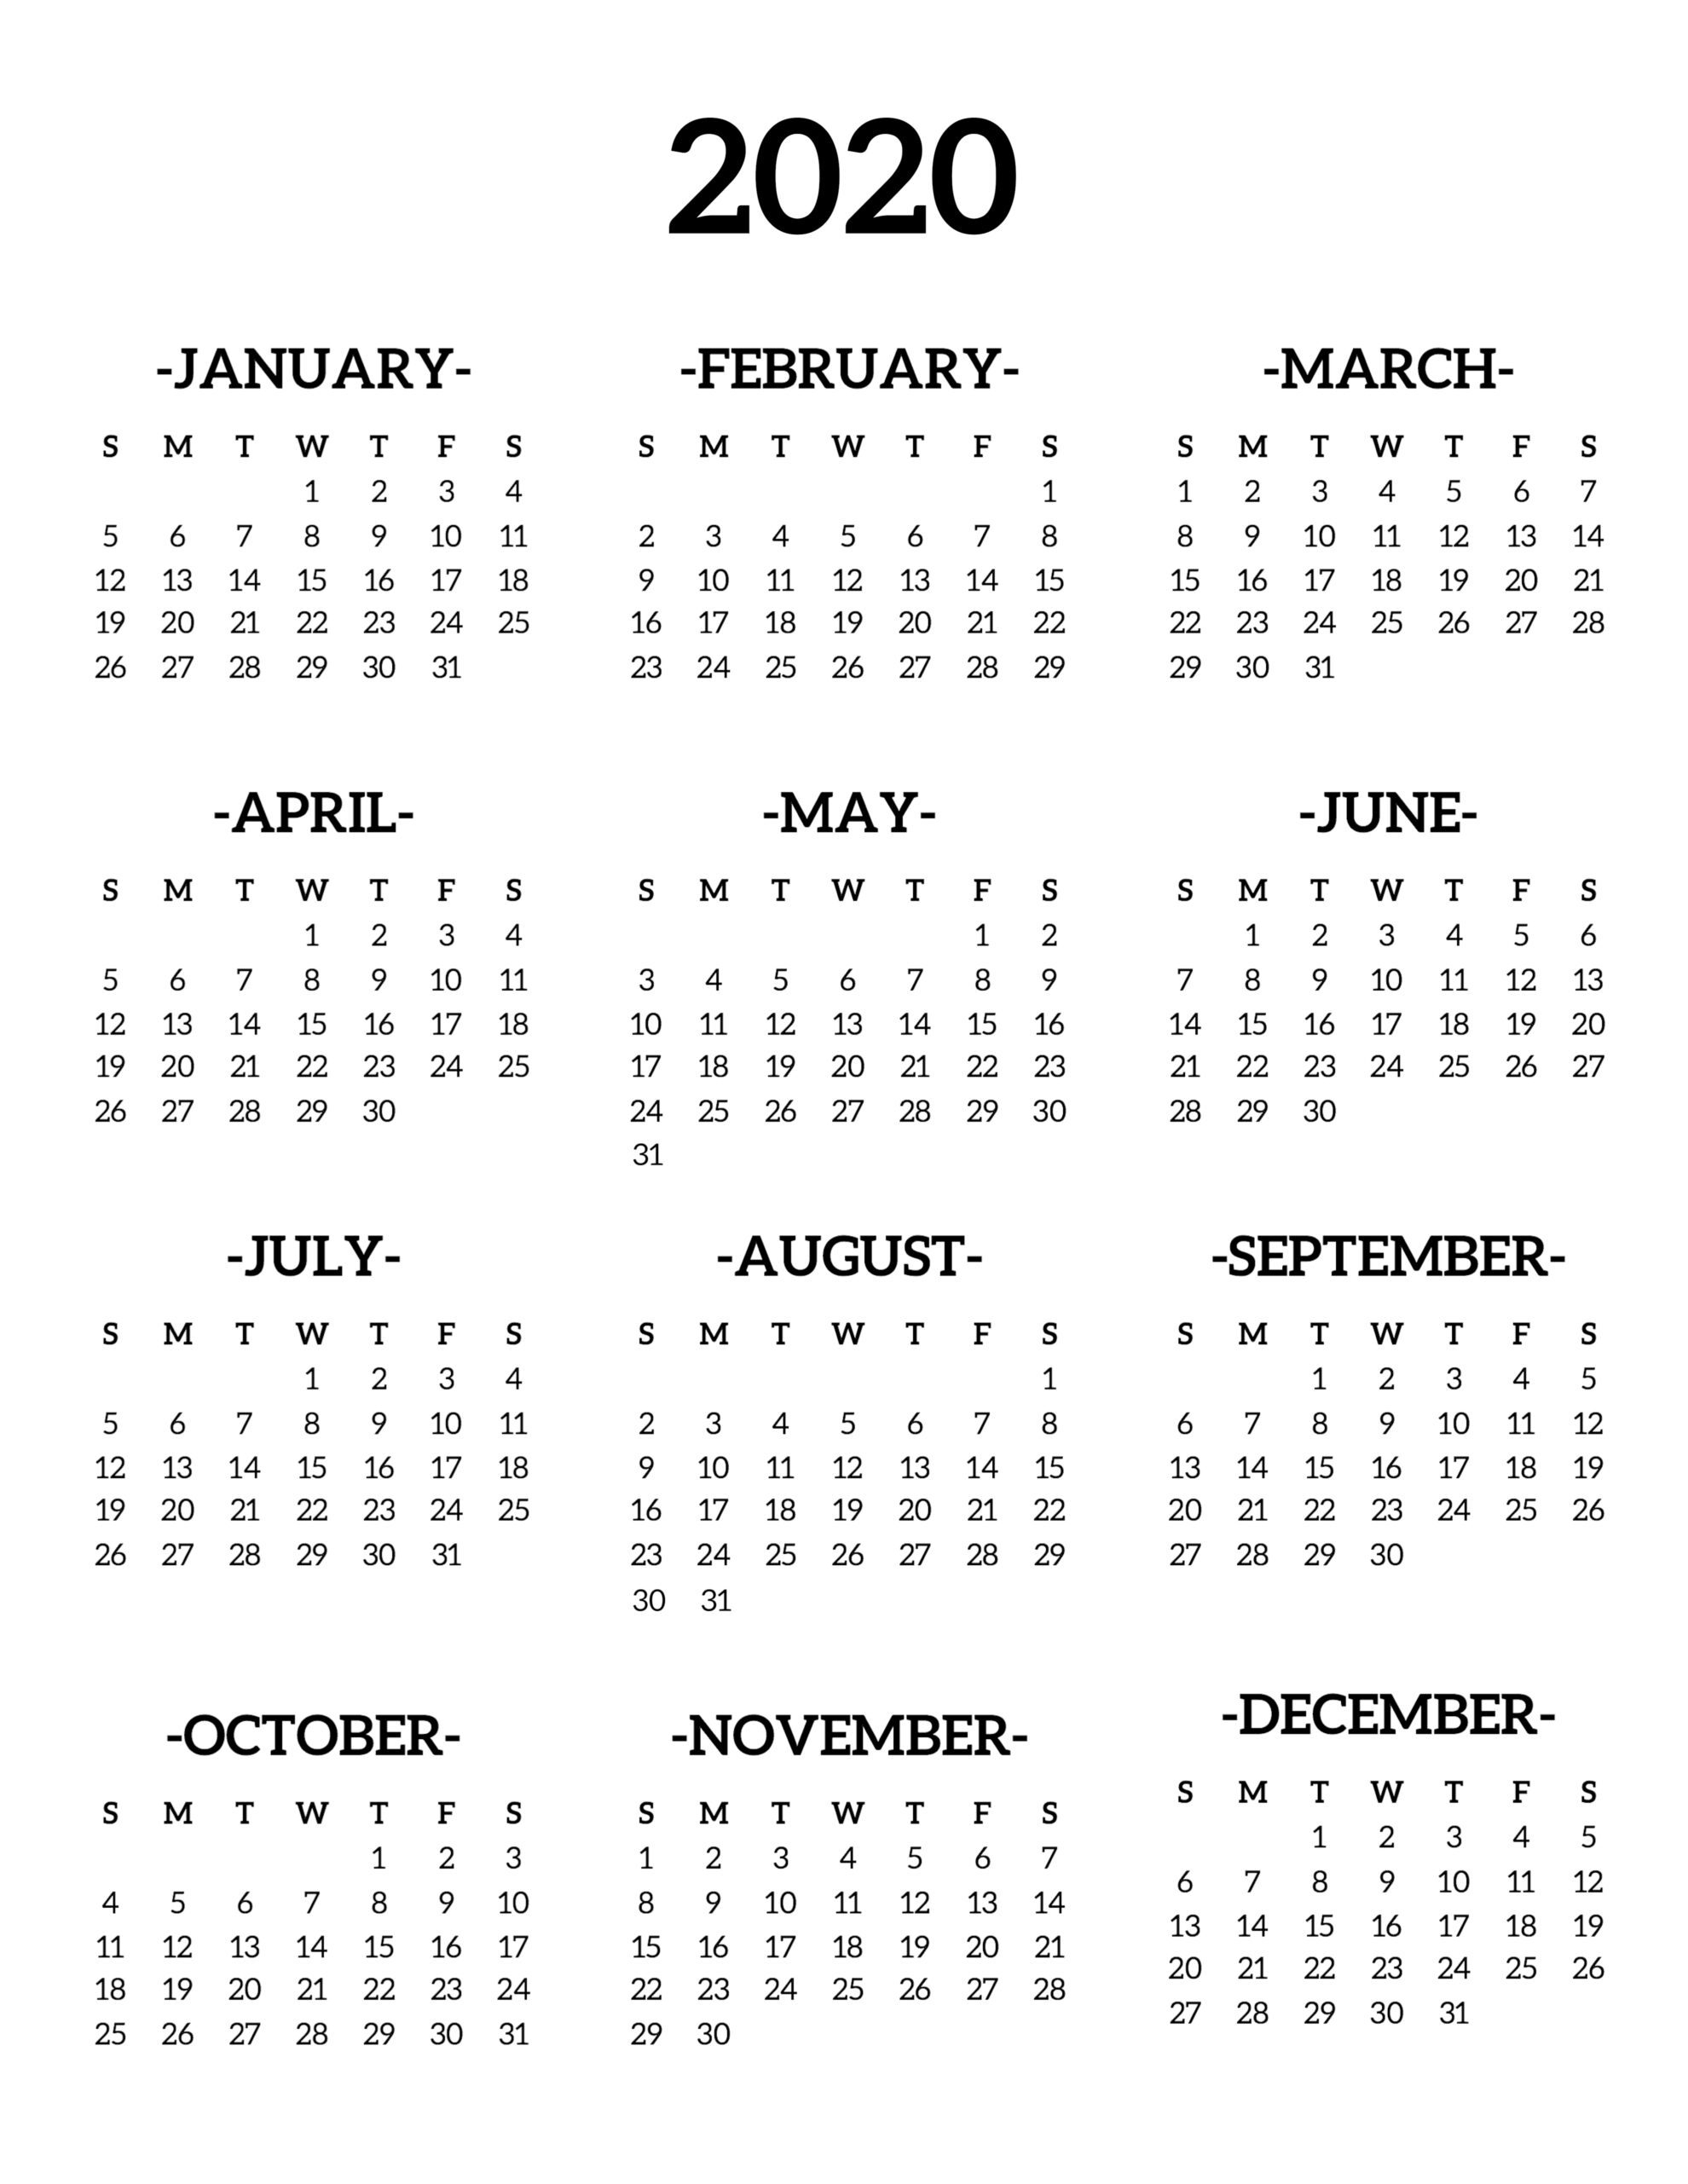 Calendar 2020 Printable One Page - Paper Trail Design regarding 2020 Year At A Glance Free Printable Calendar